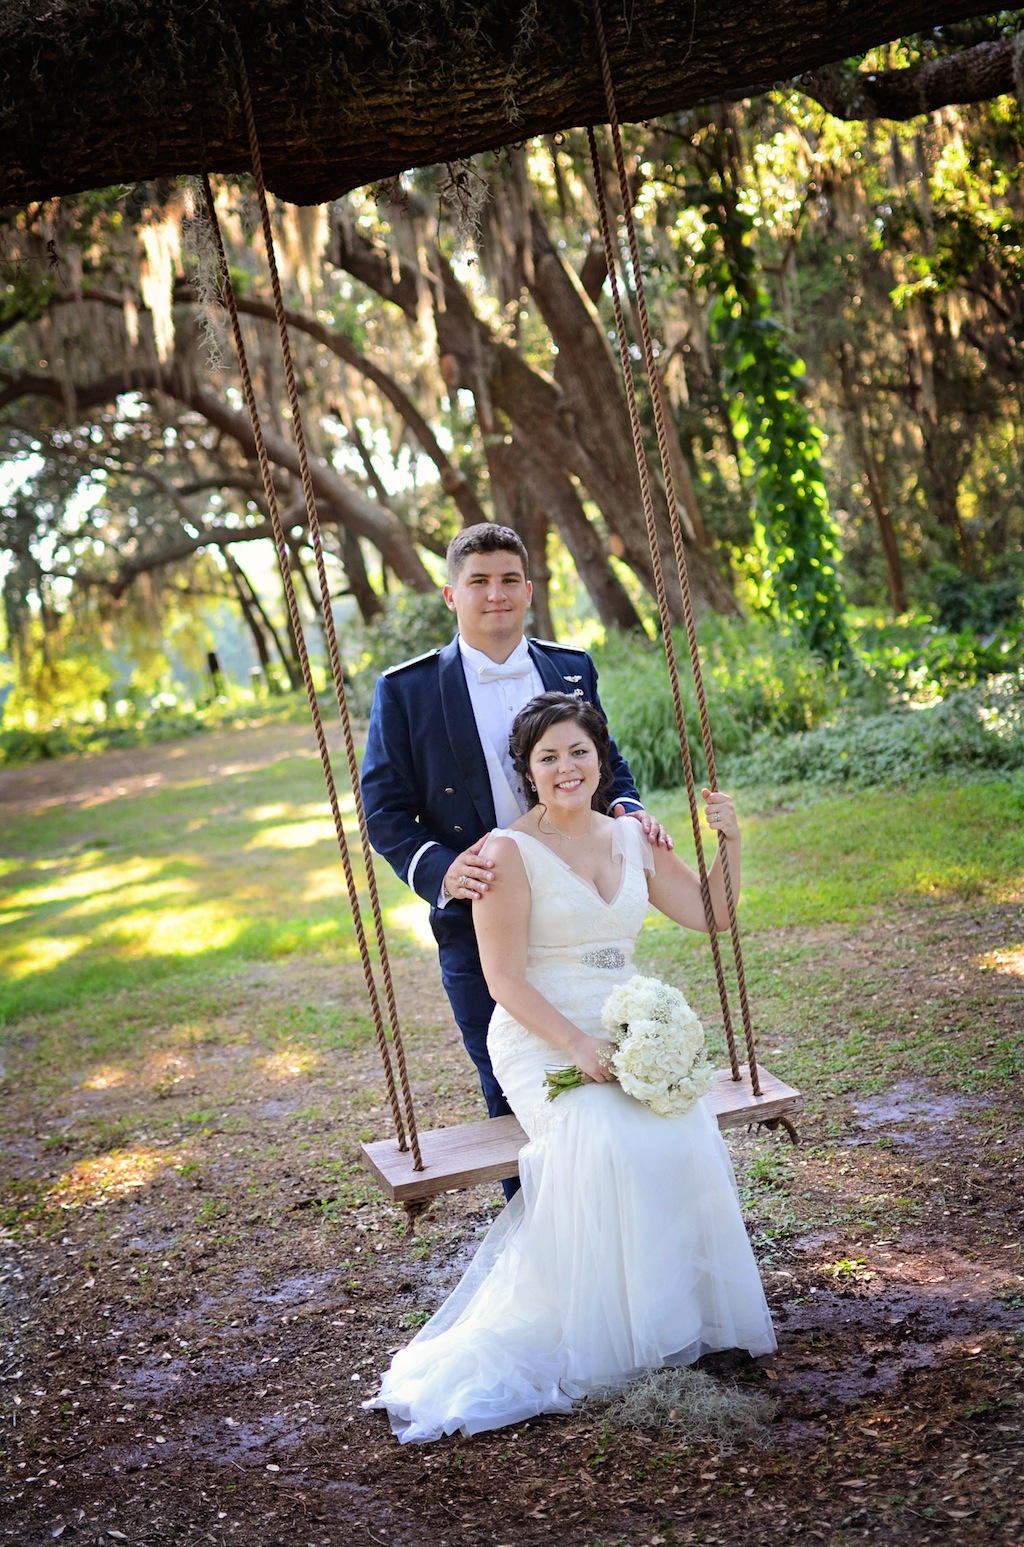 Rustic Wedding - Bride and Groom on Swing